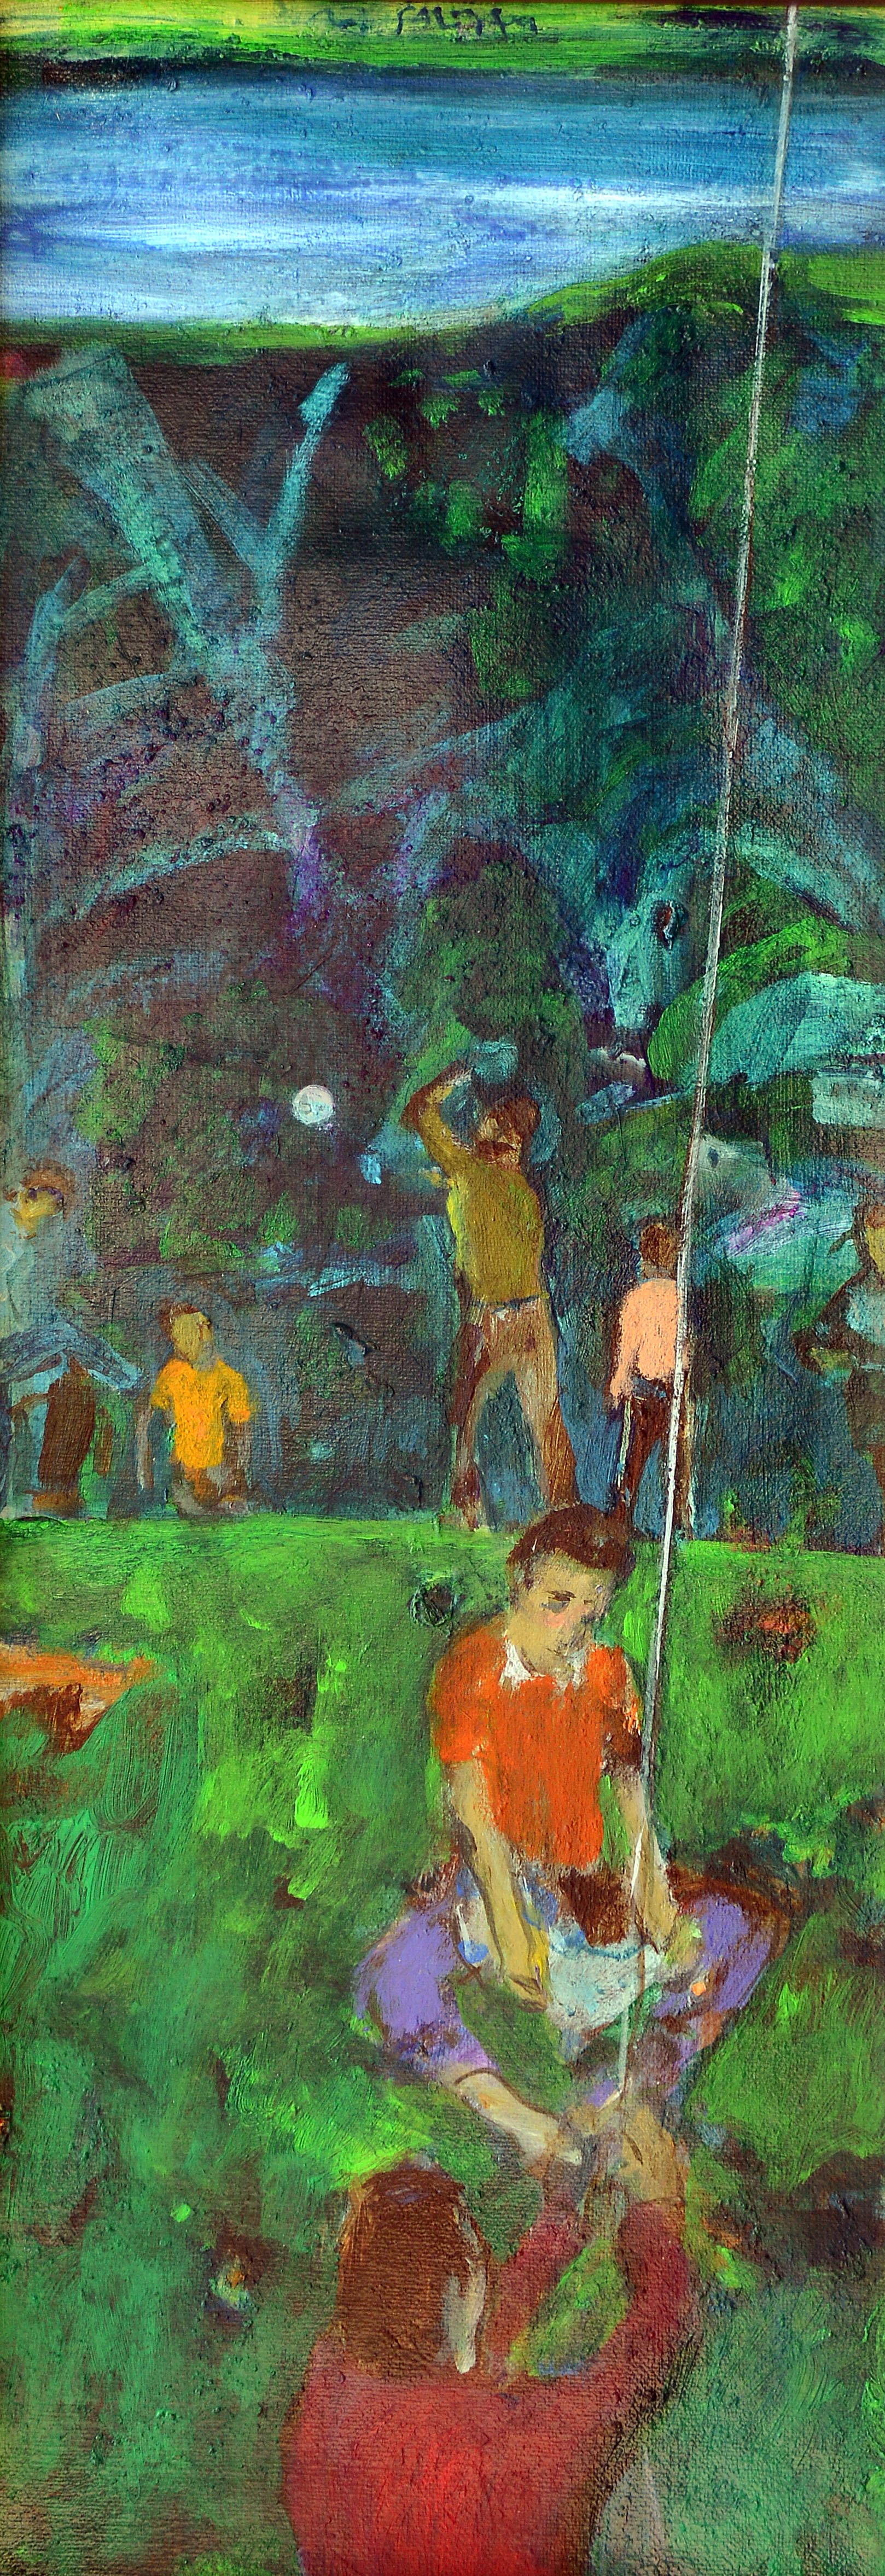 İsimsiz-Untitled, 2001,Tuval üzerine yağlıboya-Oil on canvas, 70X25cm